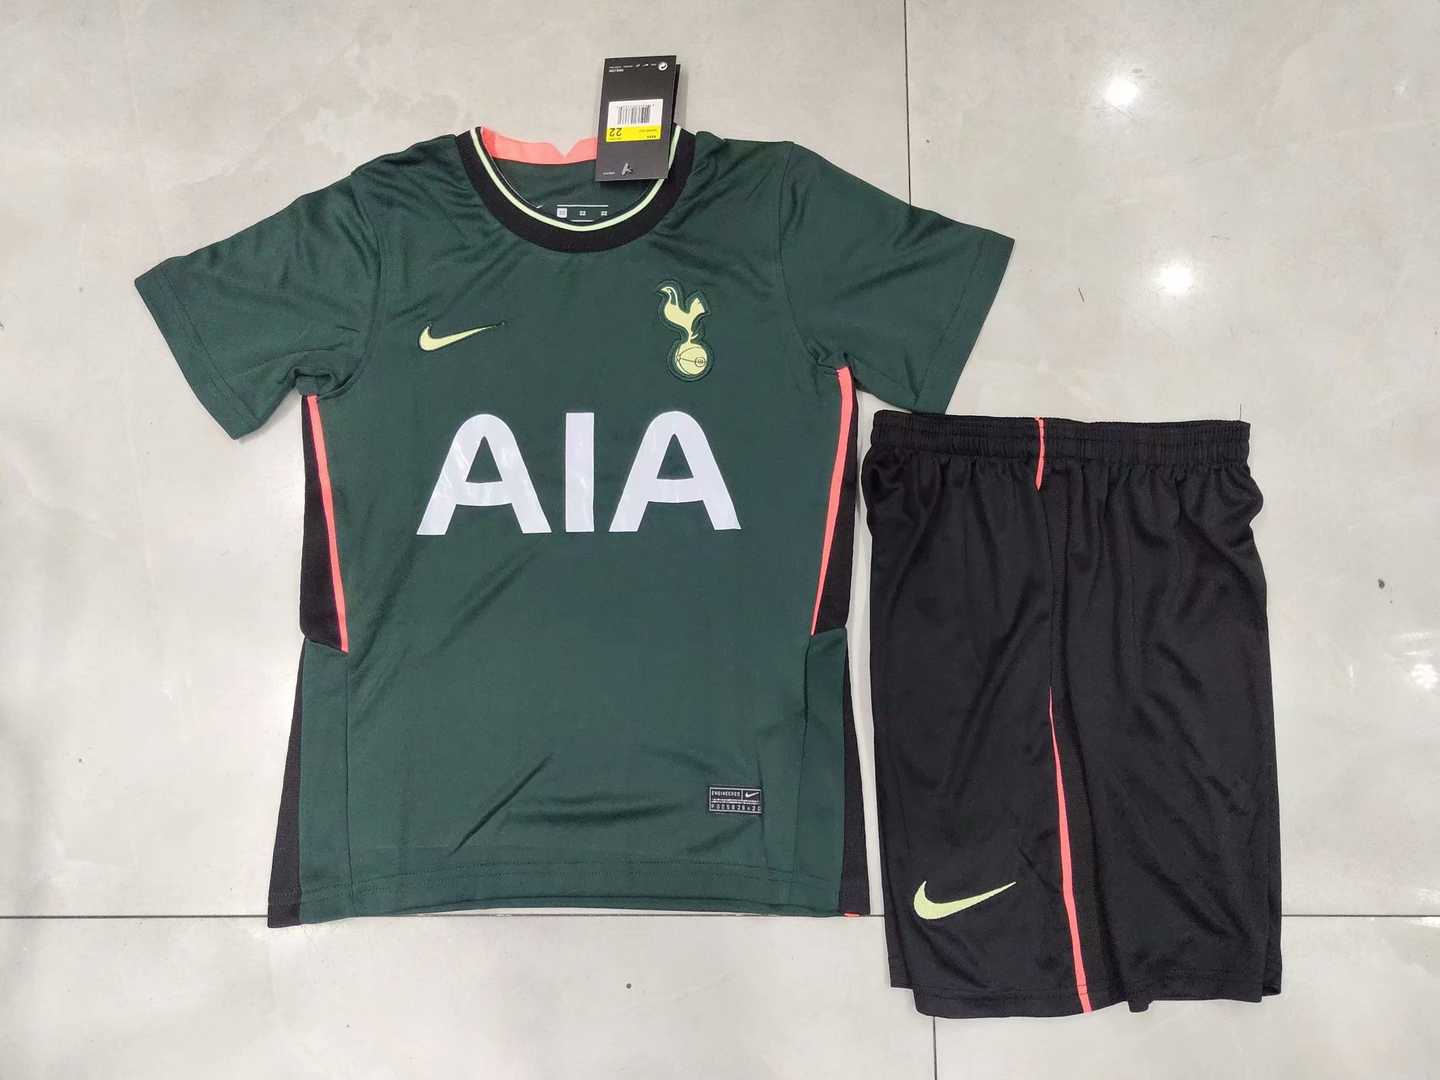 2020/21 Tottenham Hotspur Away Kids Soccer Kit(Jersey+Shorts)